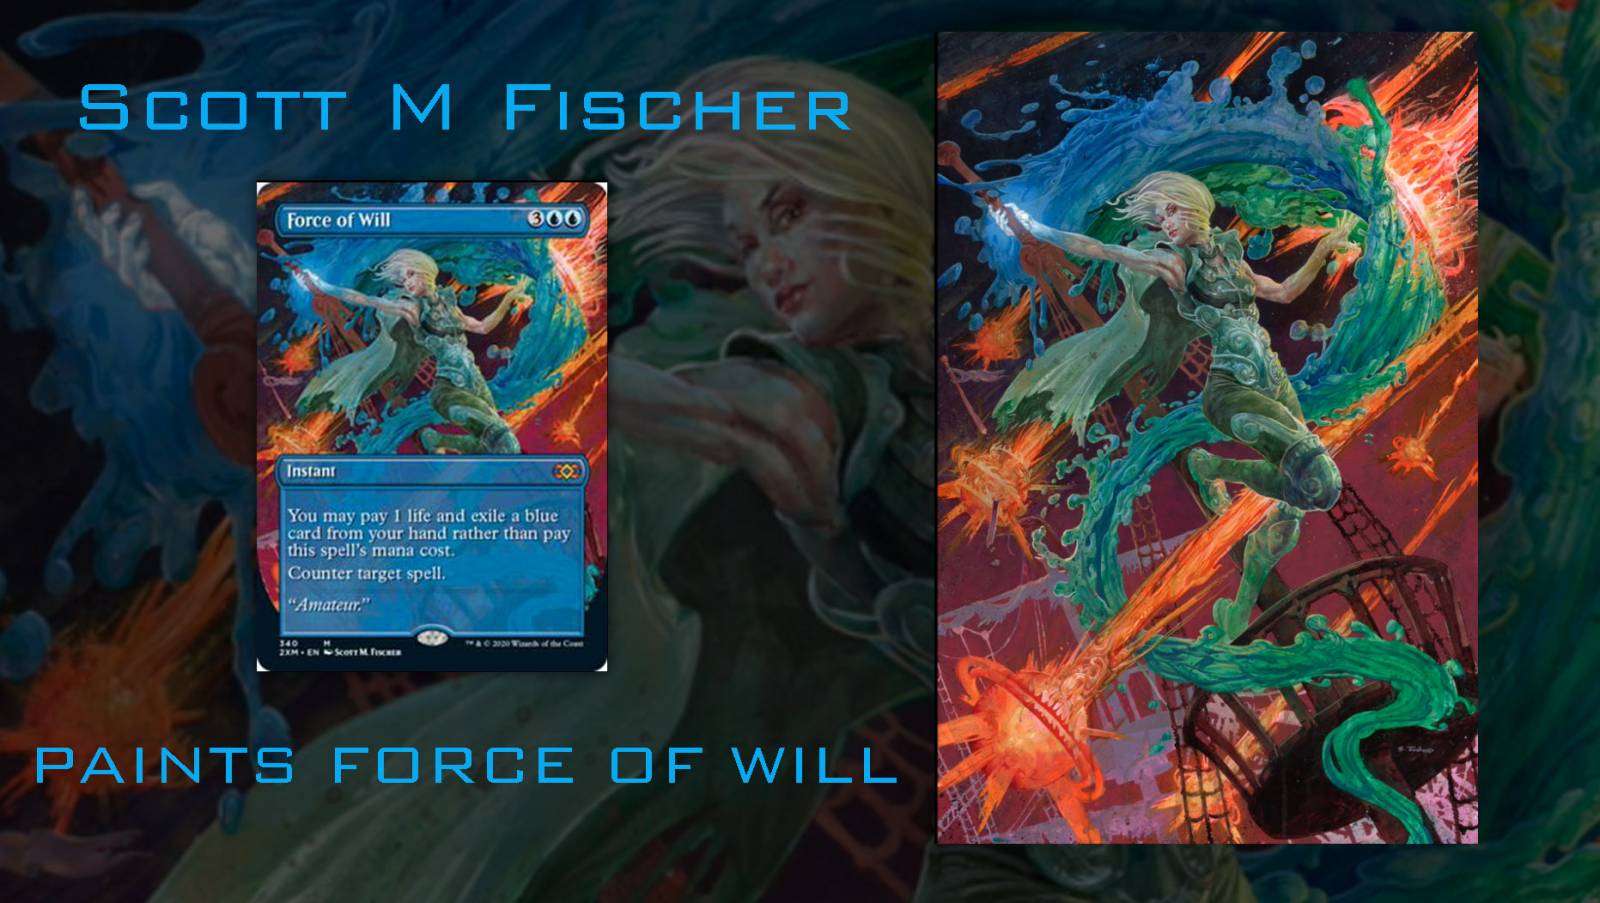 Scott Fischer paints ‘Force of Will’